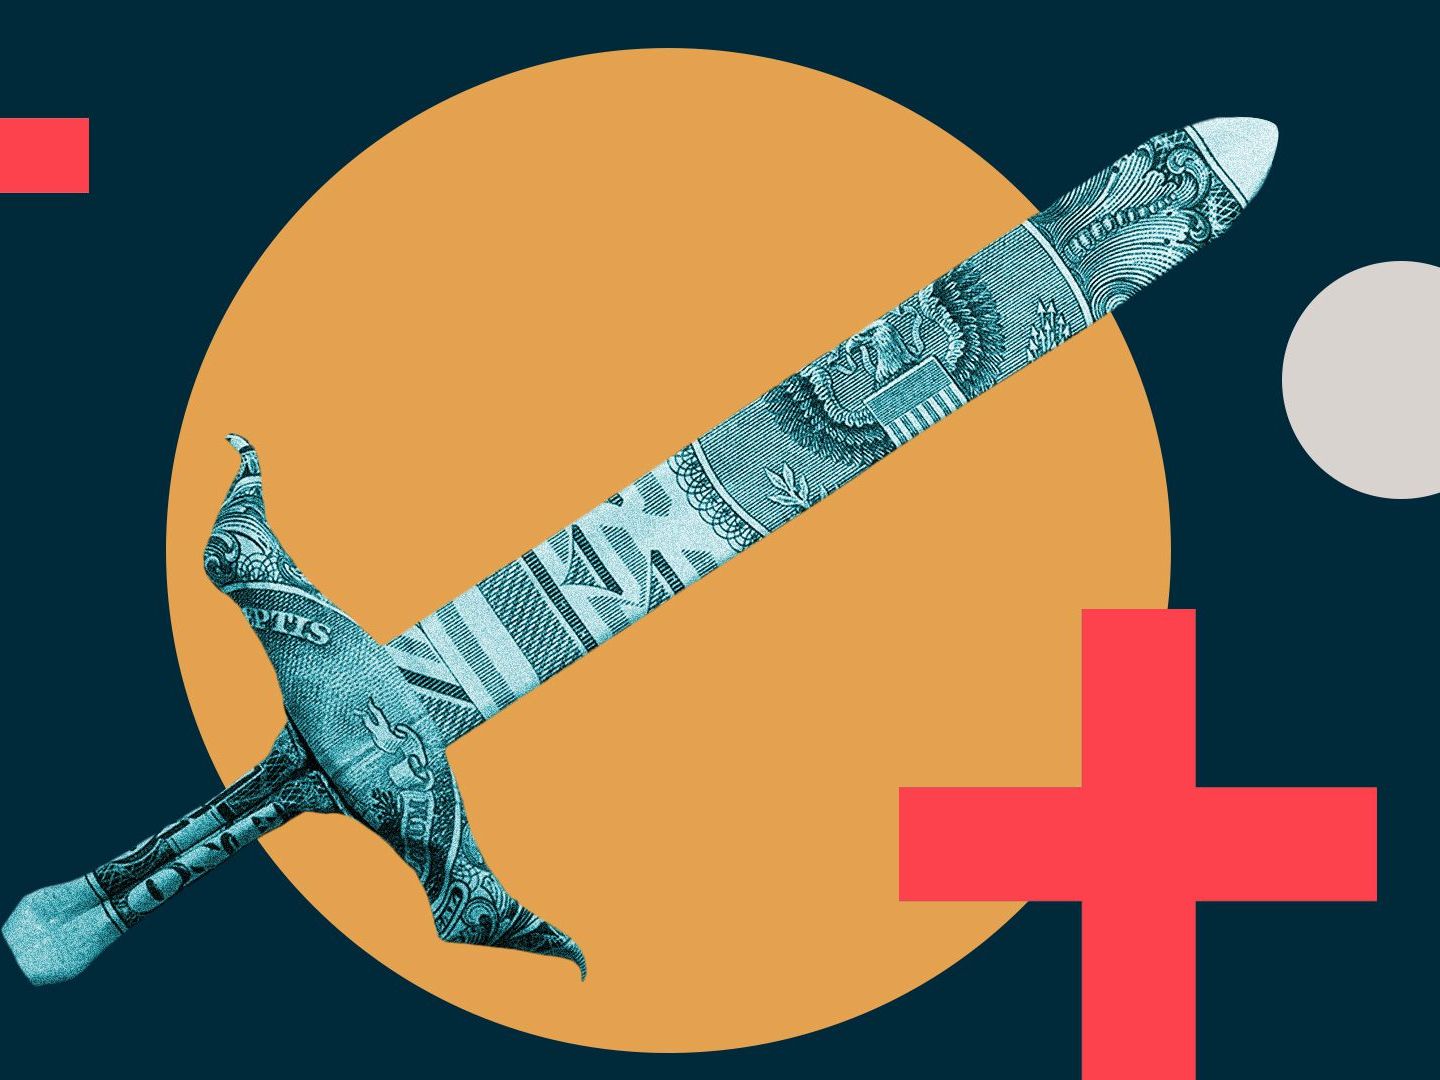 Minimalist Crossed Swords (Hell)' Sticker